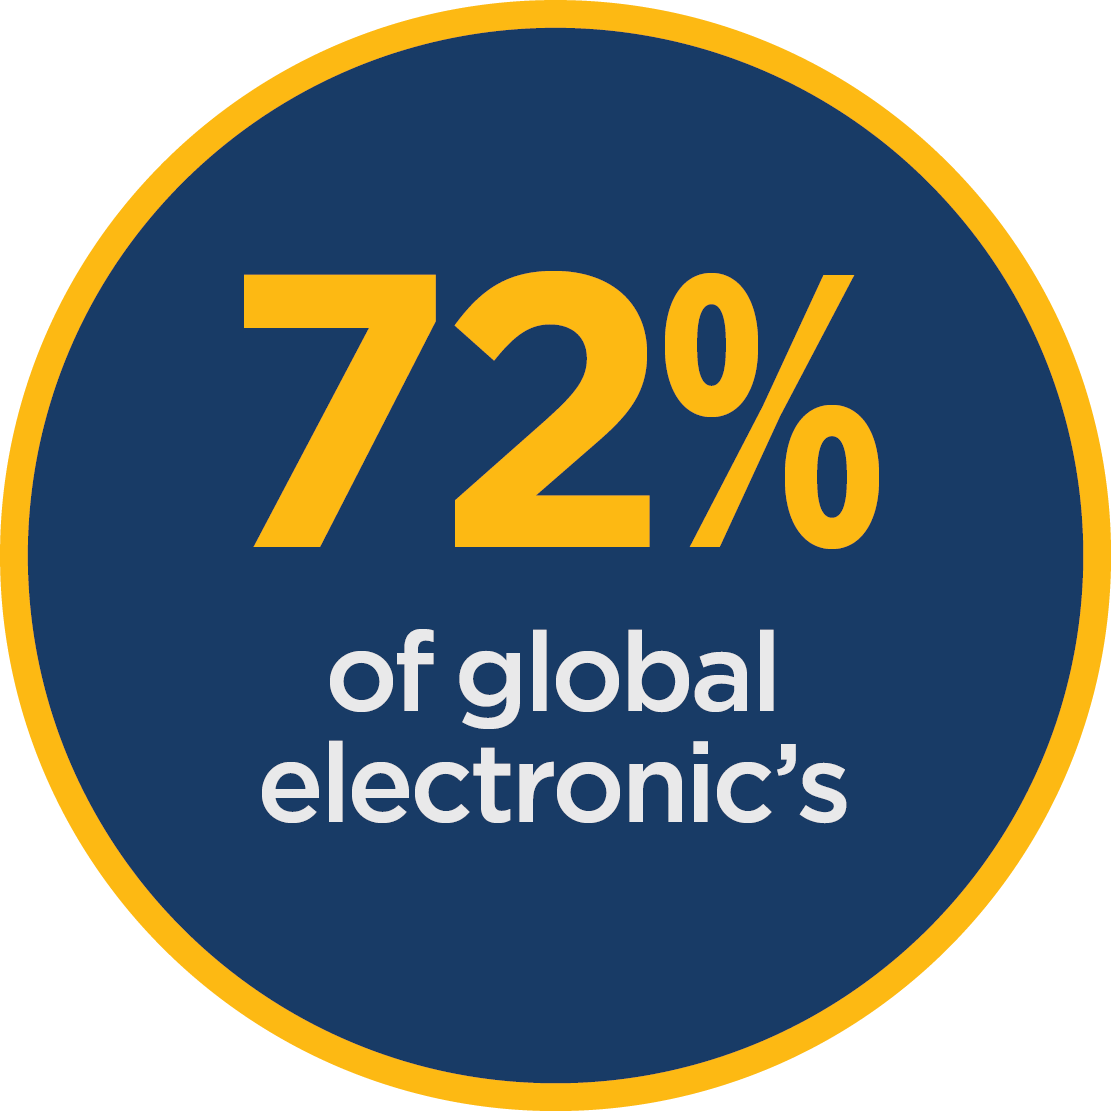 72% of global electronic's 